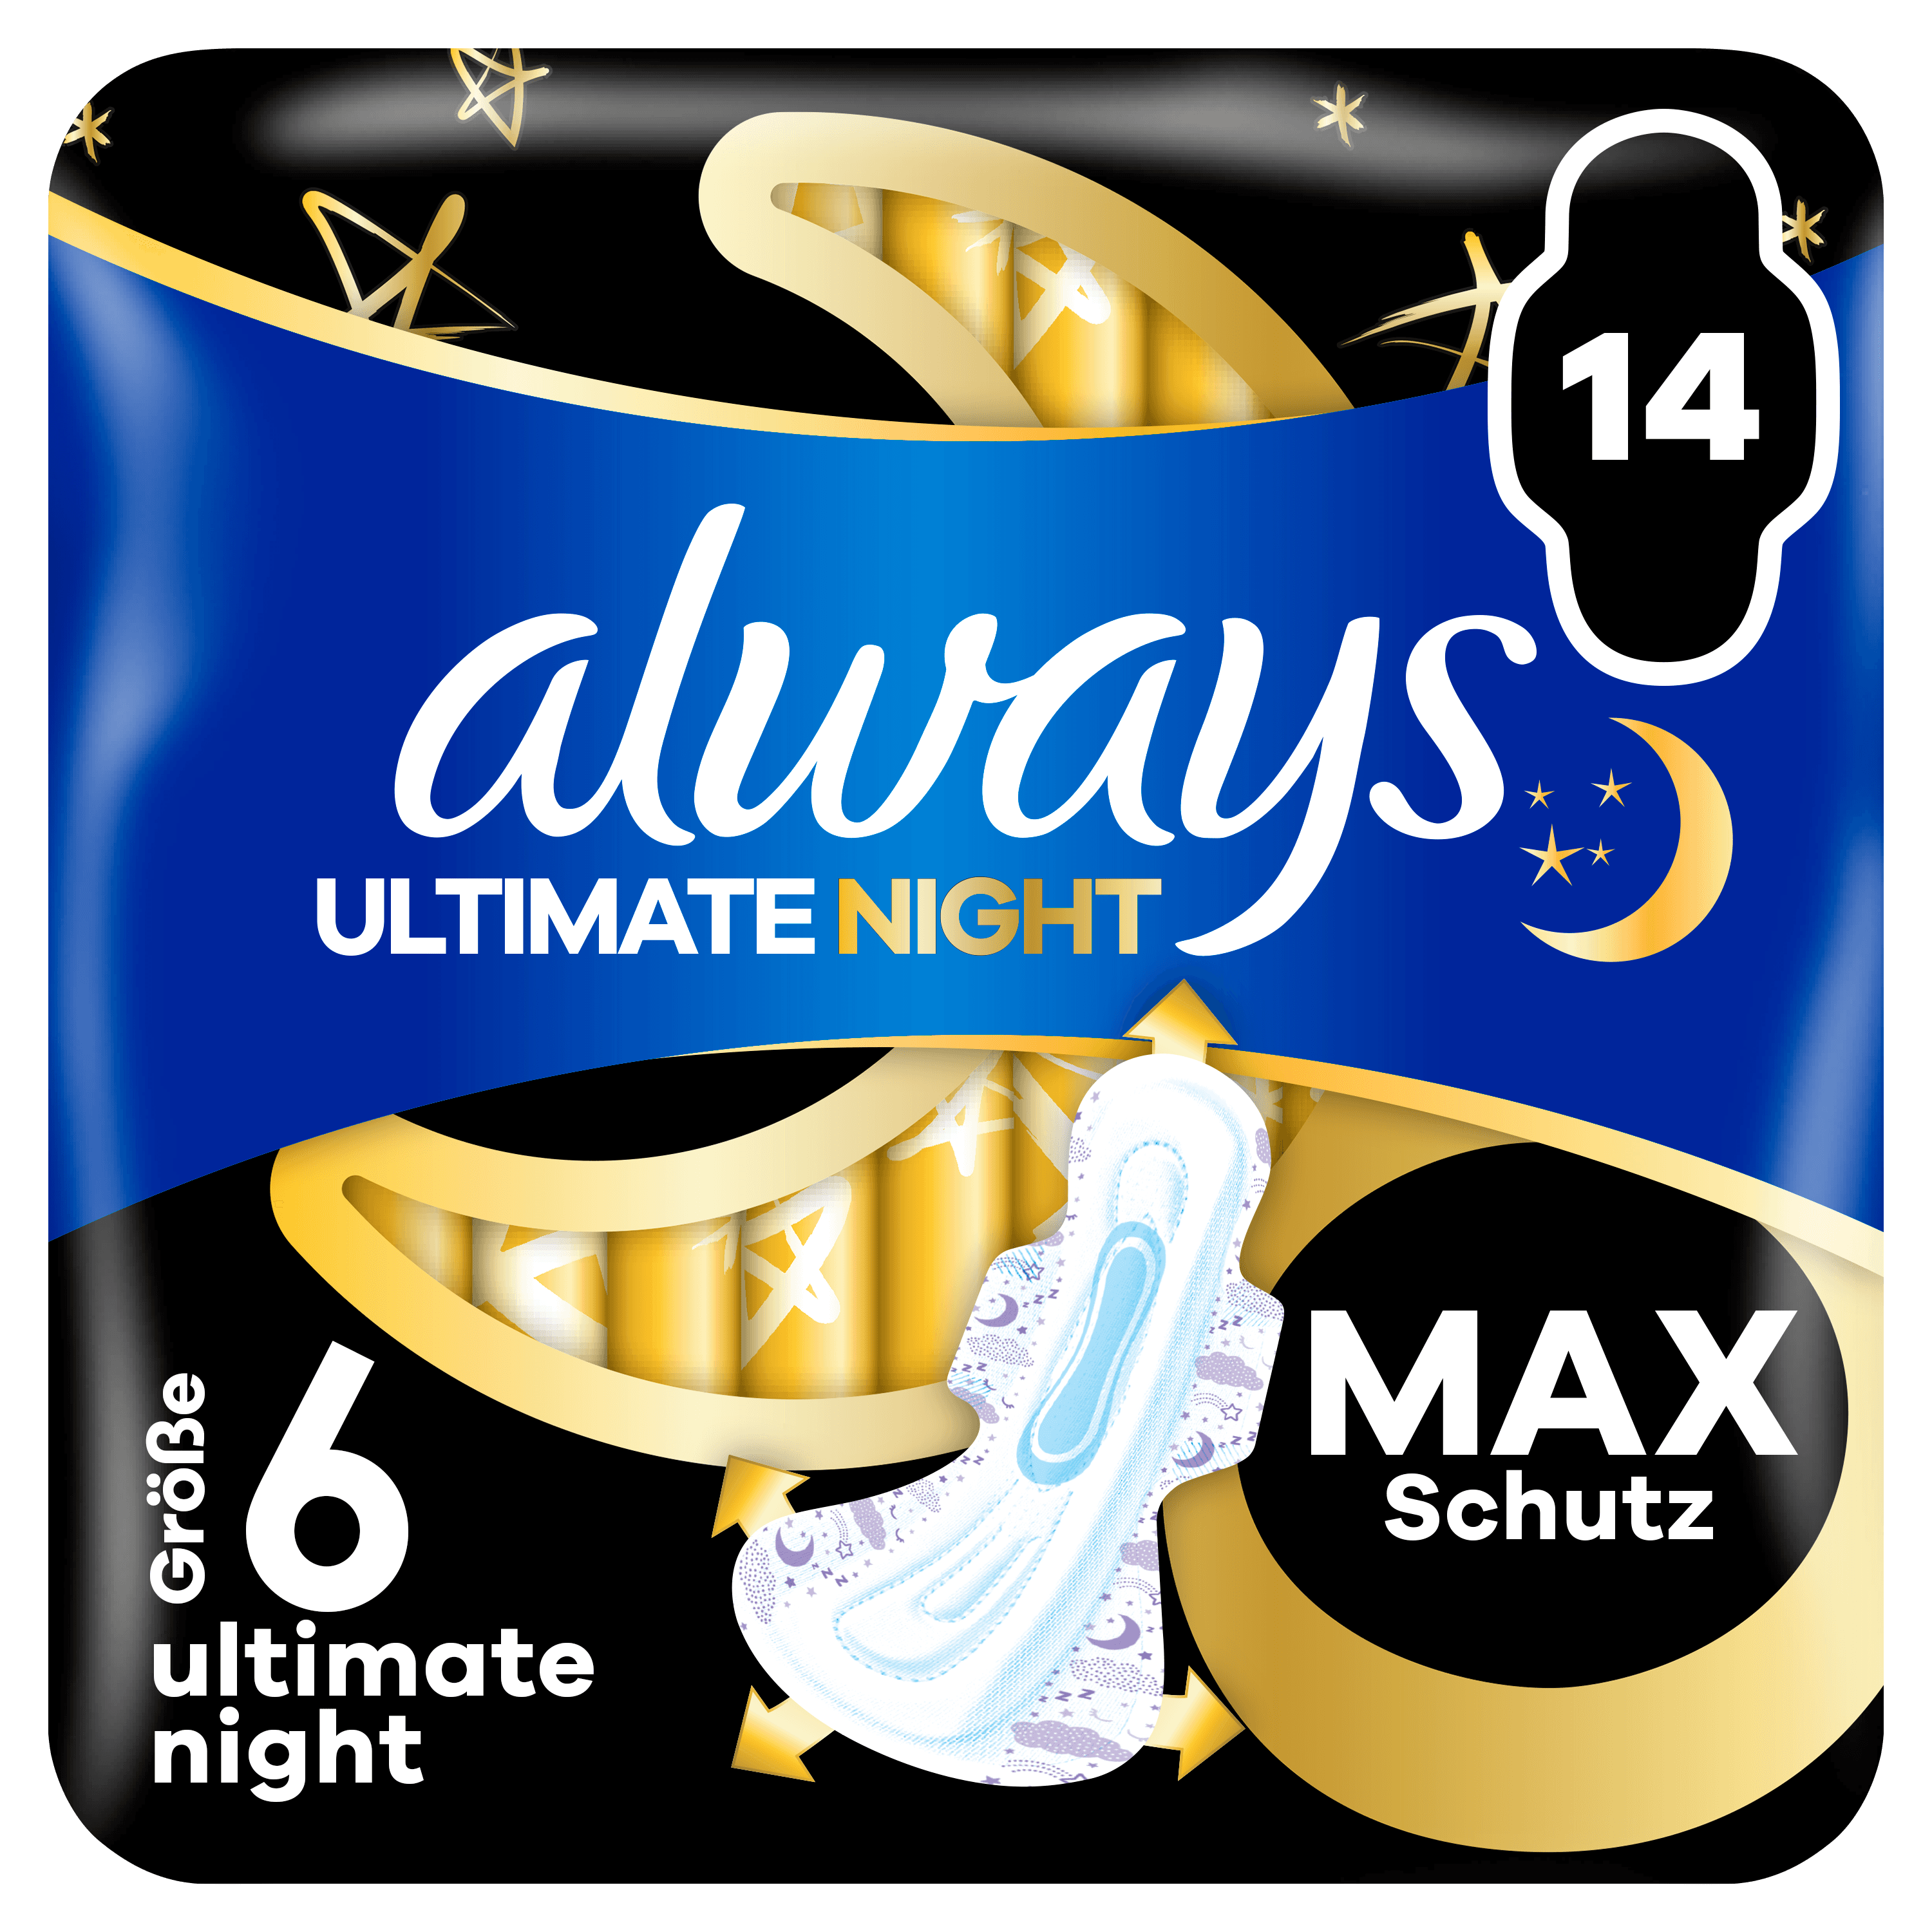 Always Ultimate Night